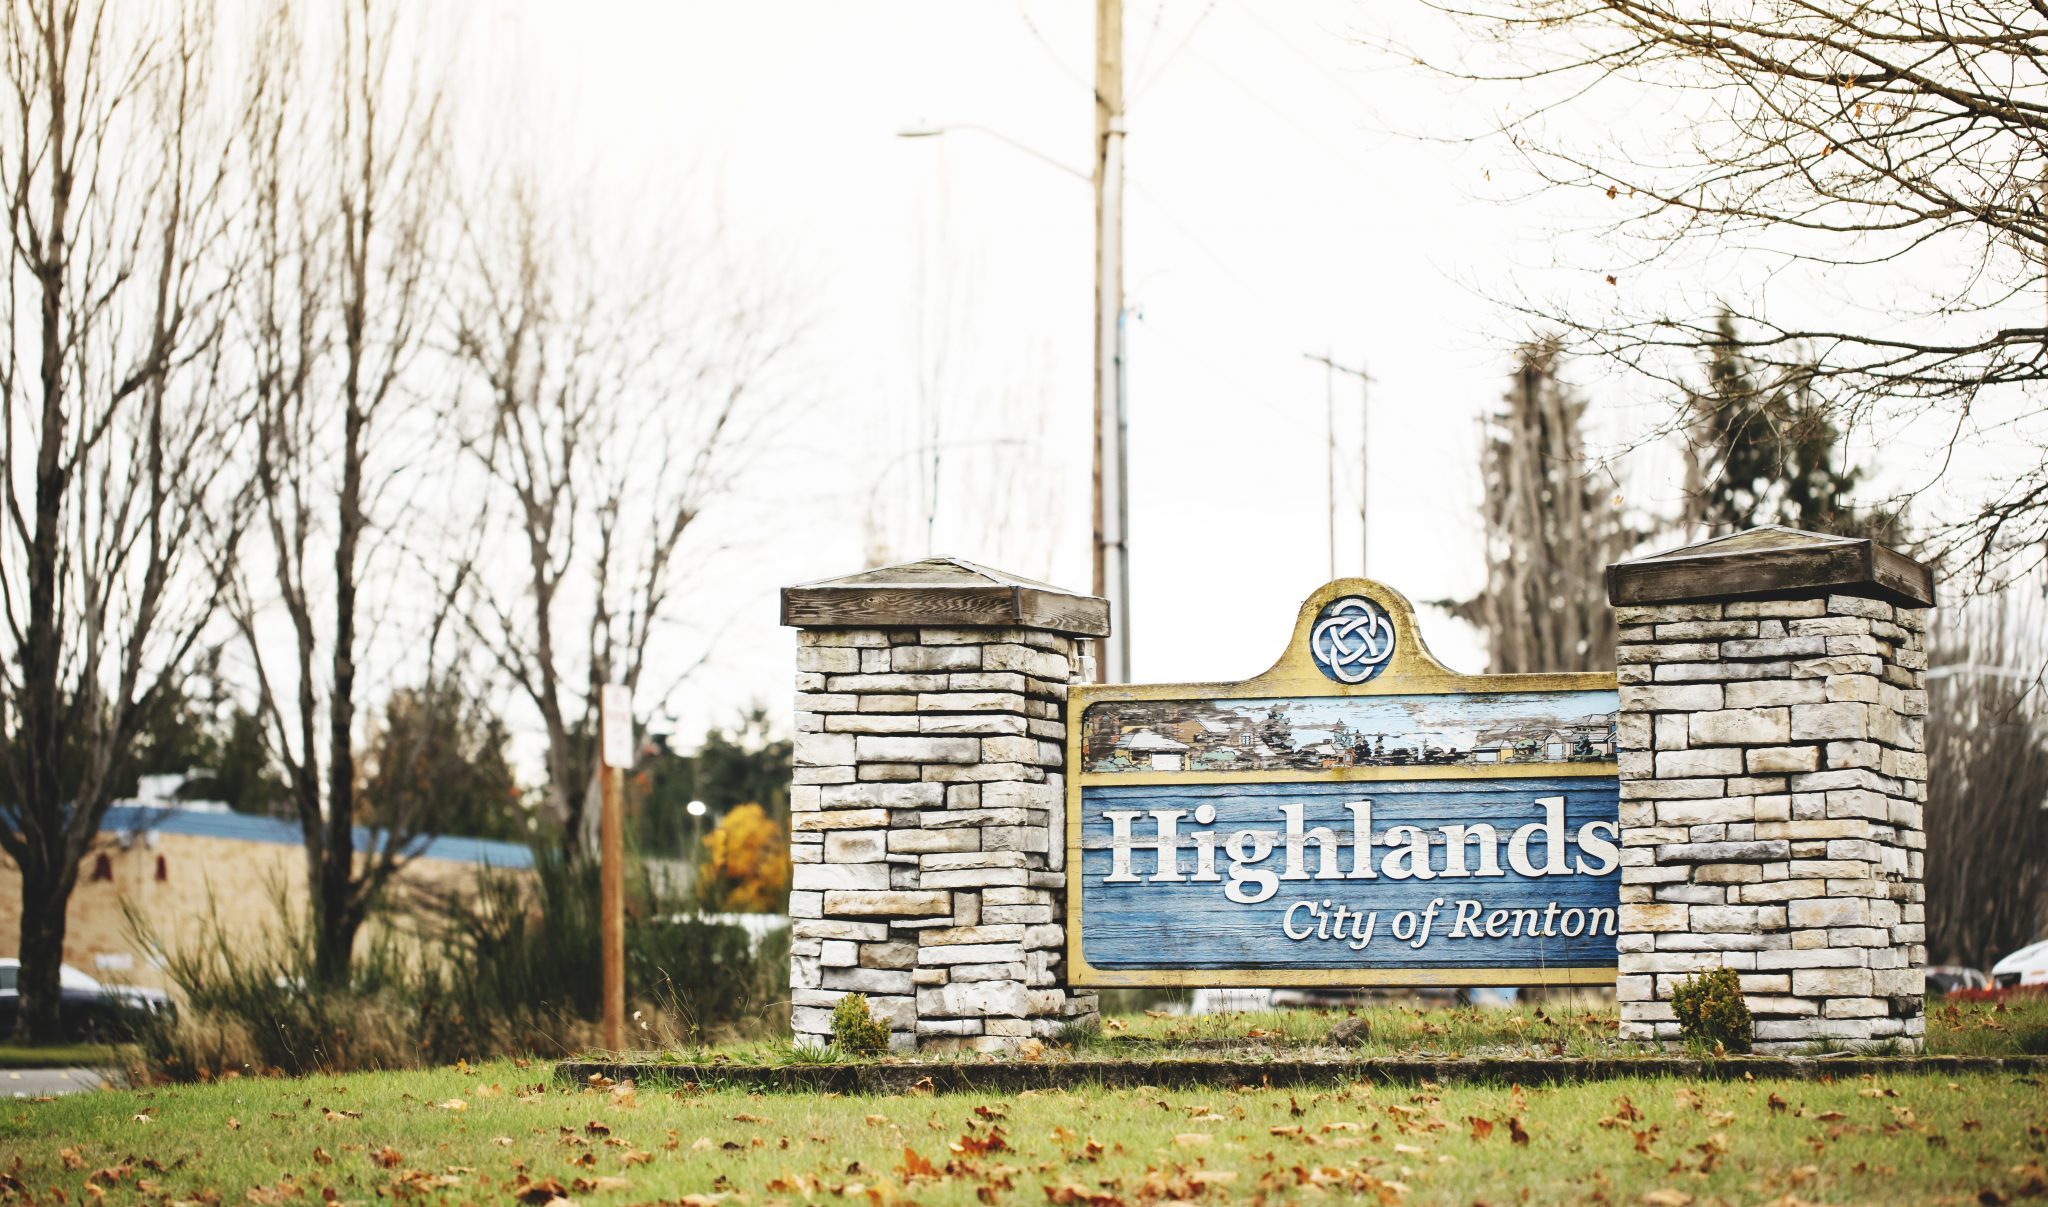 Highlands Neighborhood sign in Renton, Washington.